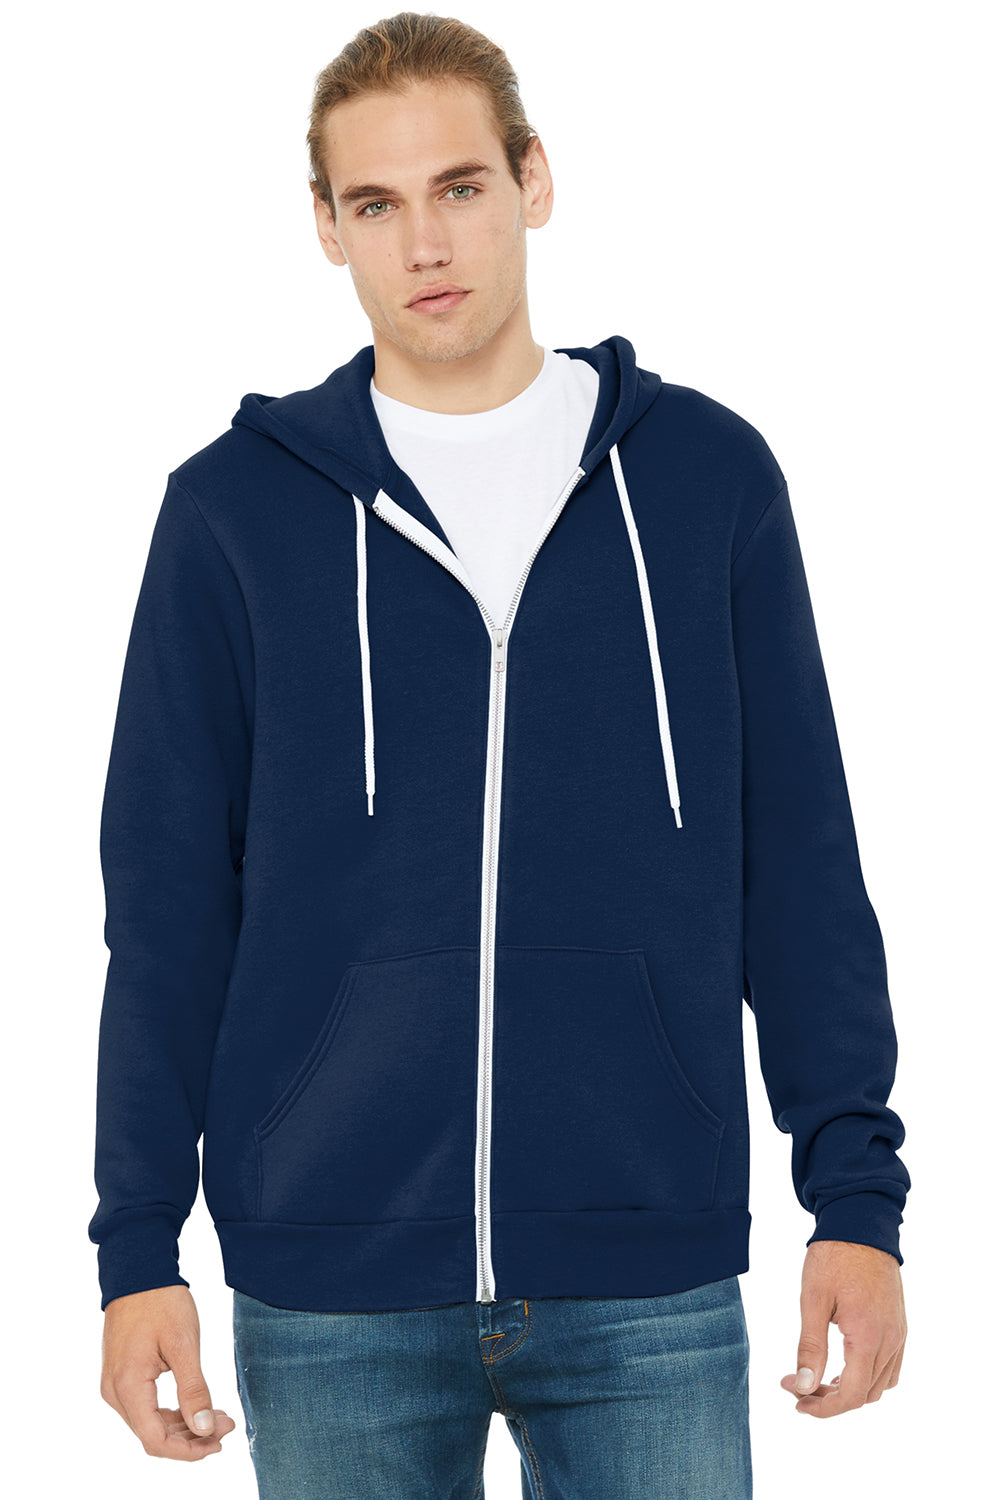 Bella + Canvas BC3739/3739 Mens Fleece Full Zip Hooded Sweatshirt Hoodie Navy Blue Model Front